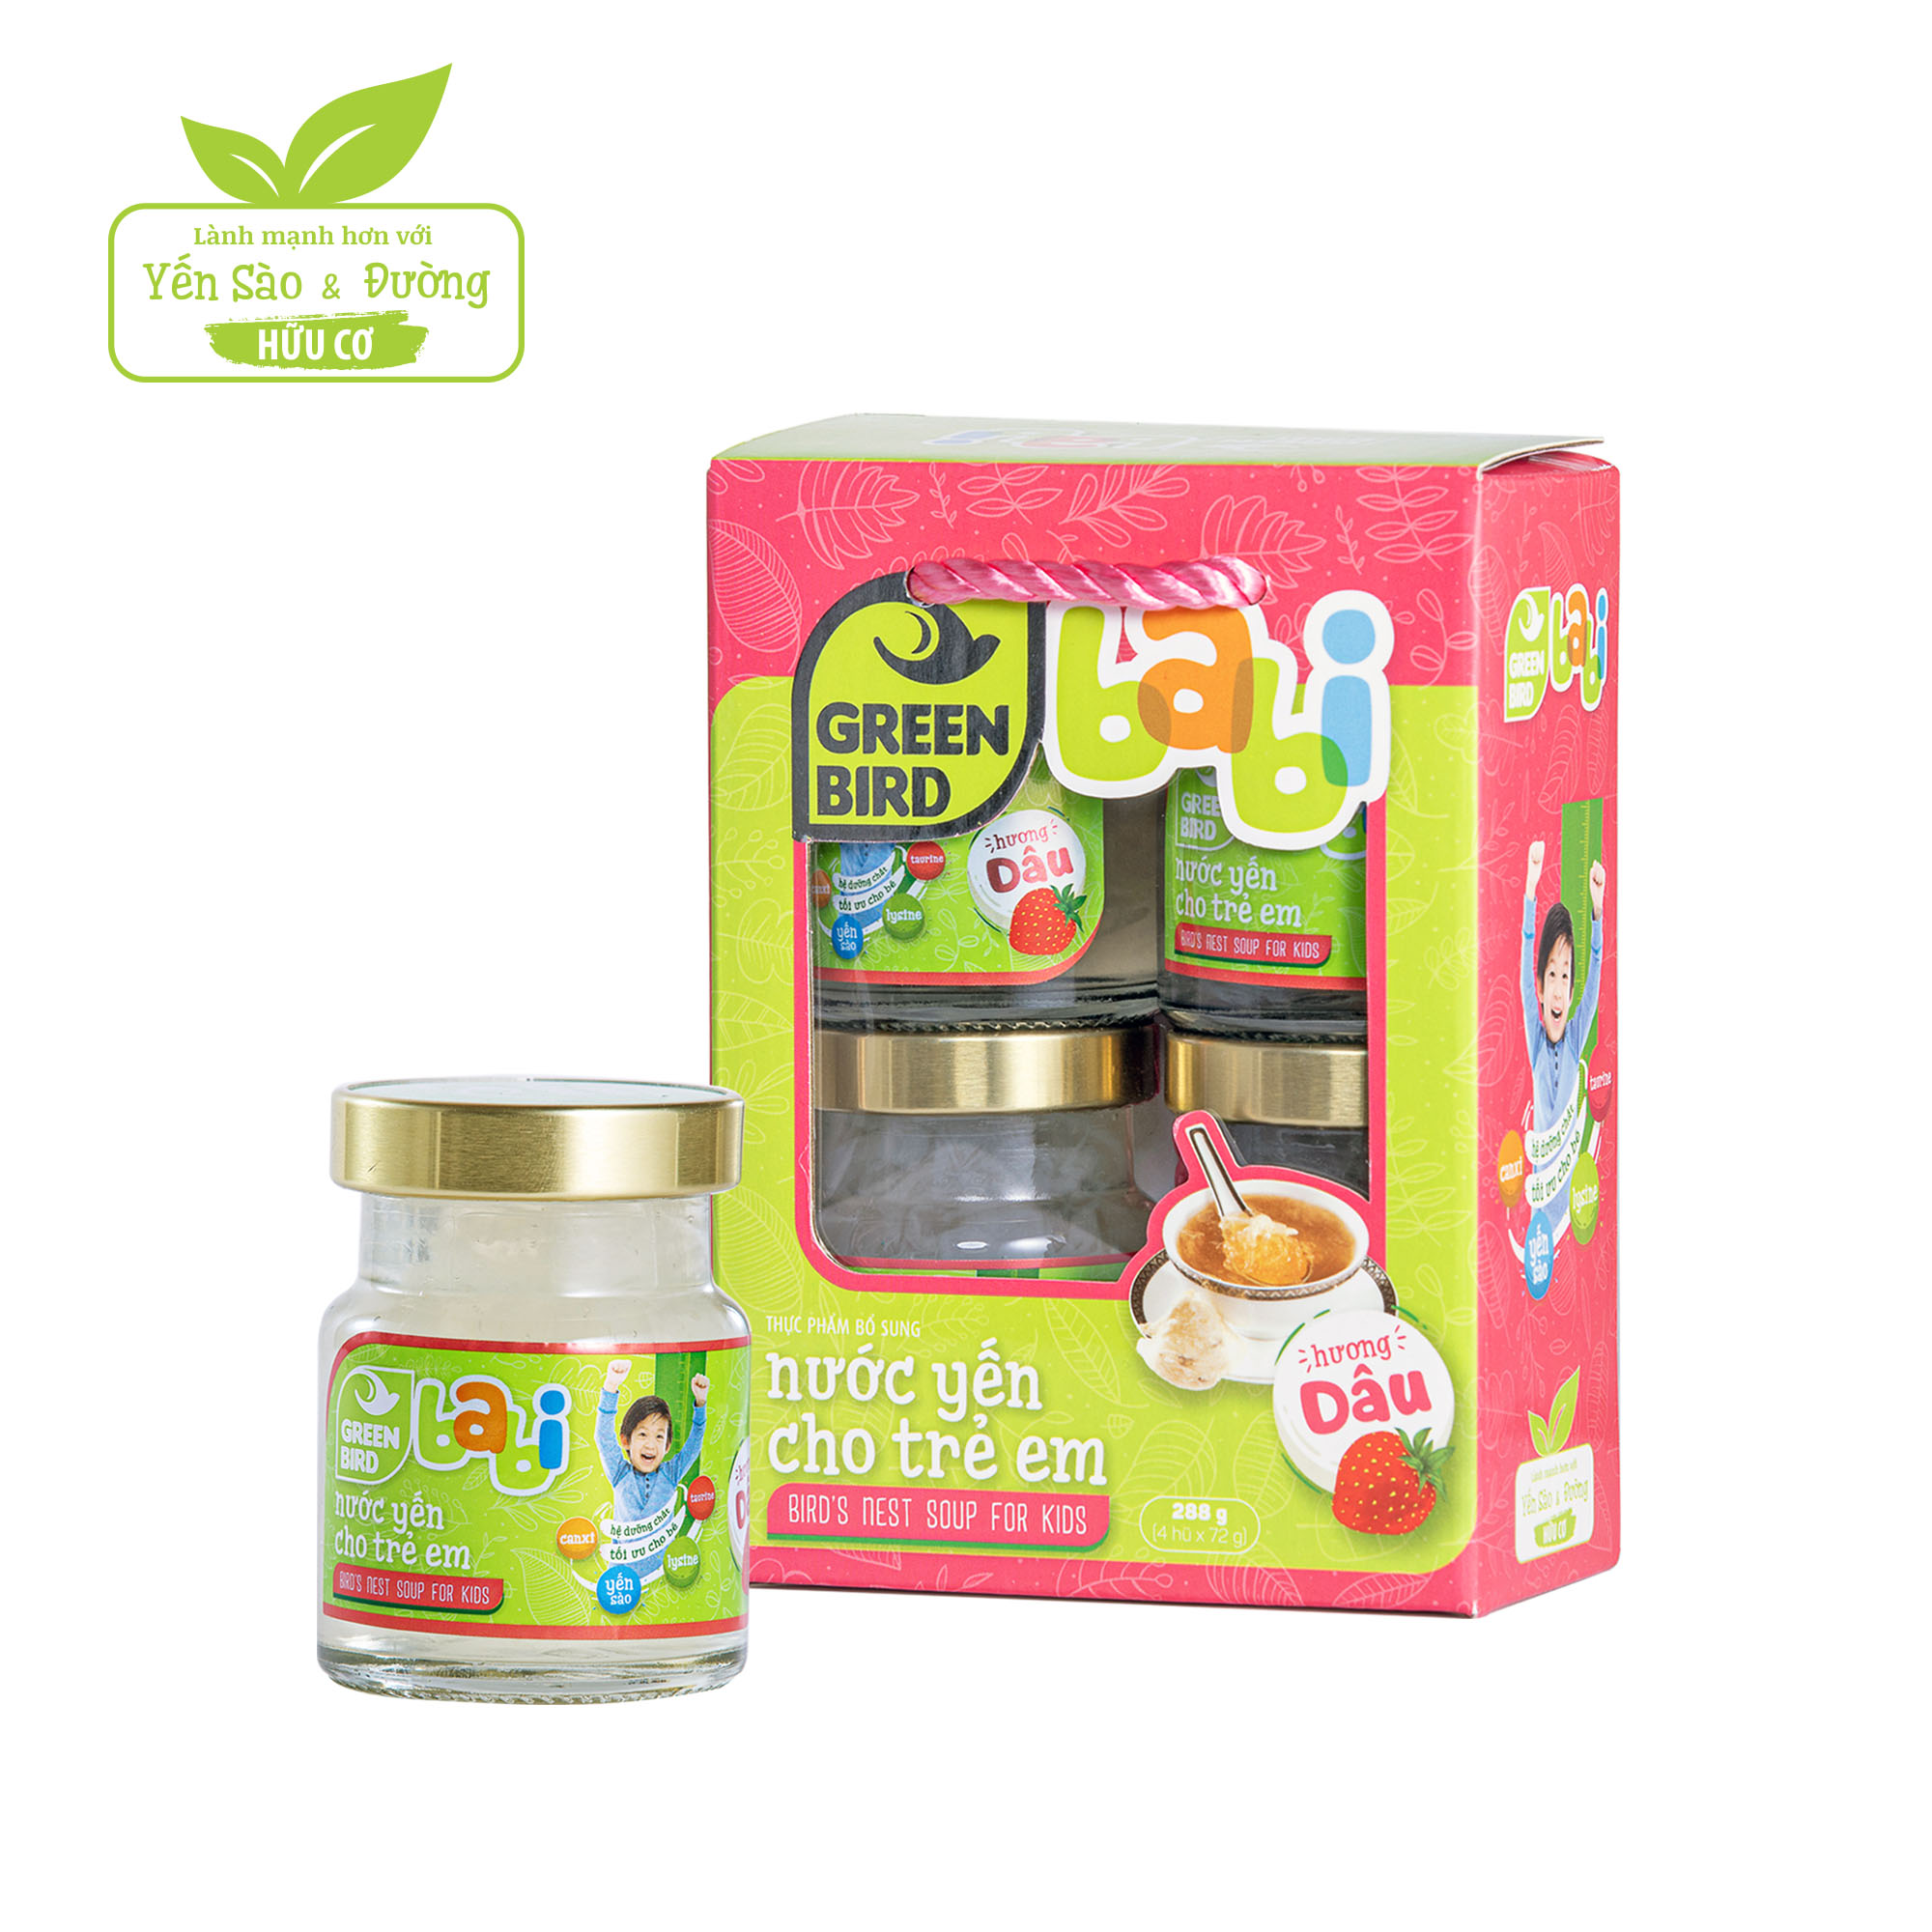  Green Bird - Bird’s nest soup for kids (Strawberry flavor) - set 4 jars x 72g 